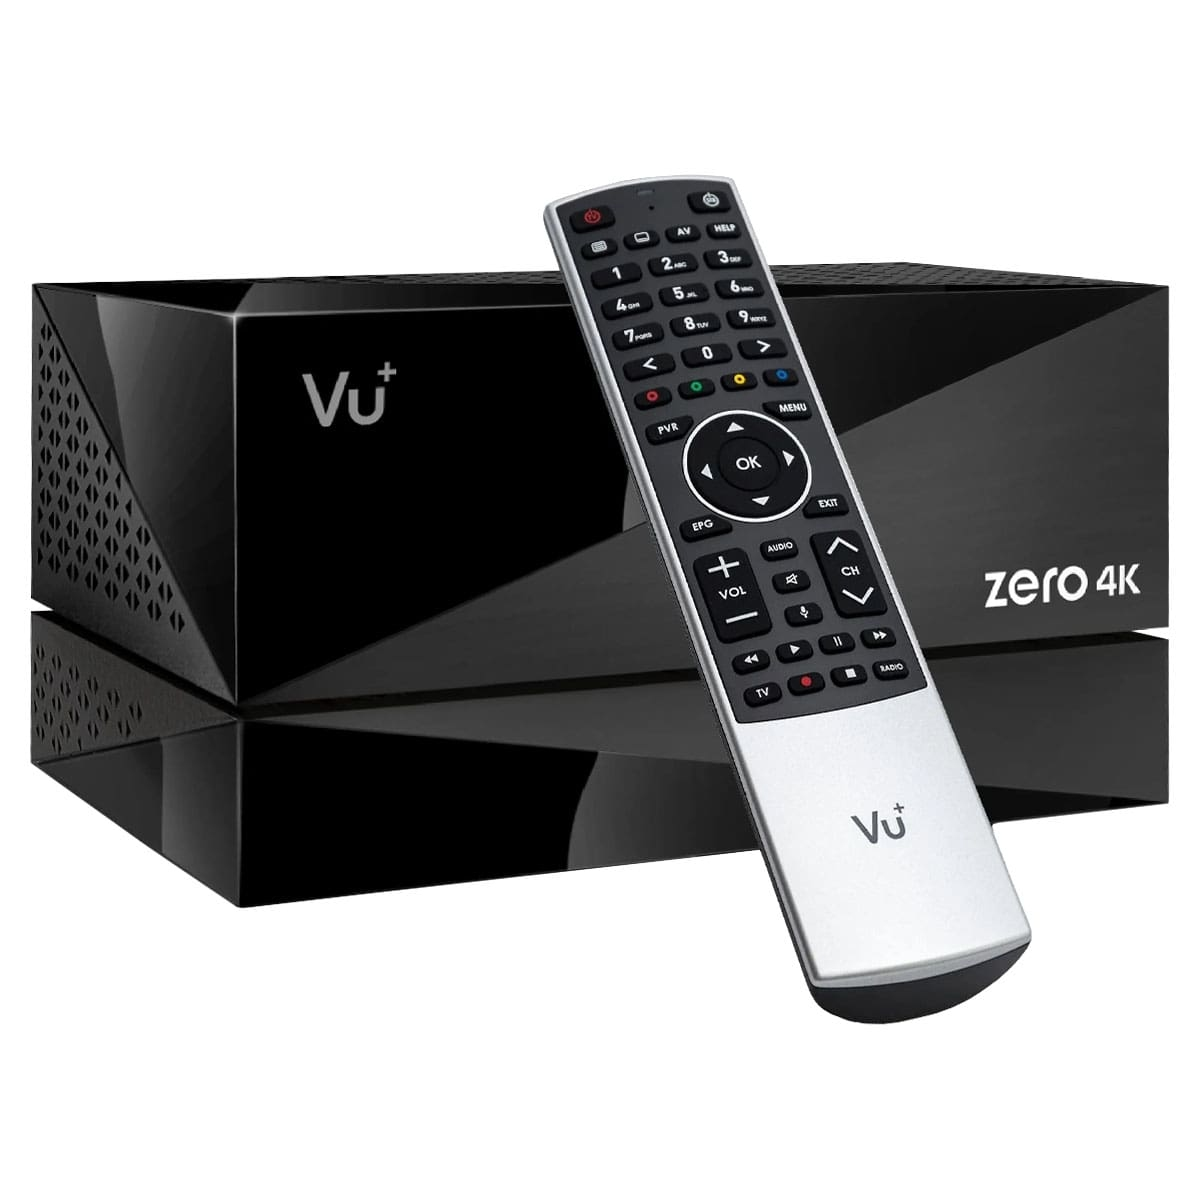 VU+ Zero 4K inkl. 500GB Kabel mit Schwarz) PVR-Kit Receiver 4K BT DVB-C/T2 (PVR-Funktion, HDD